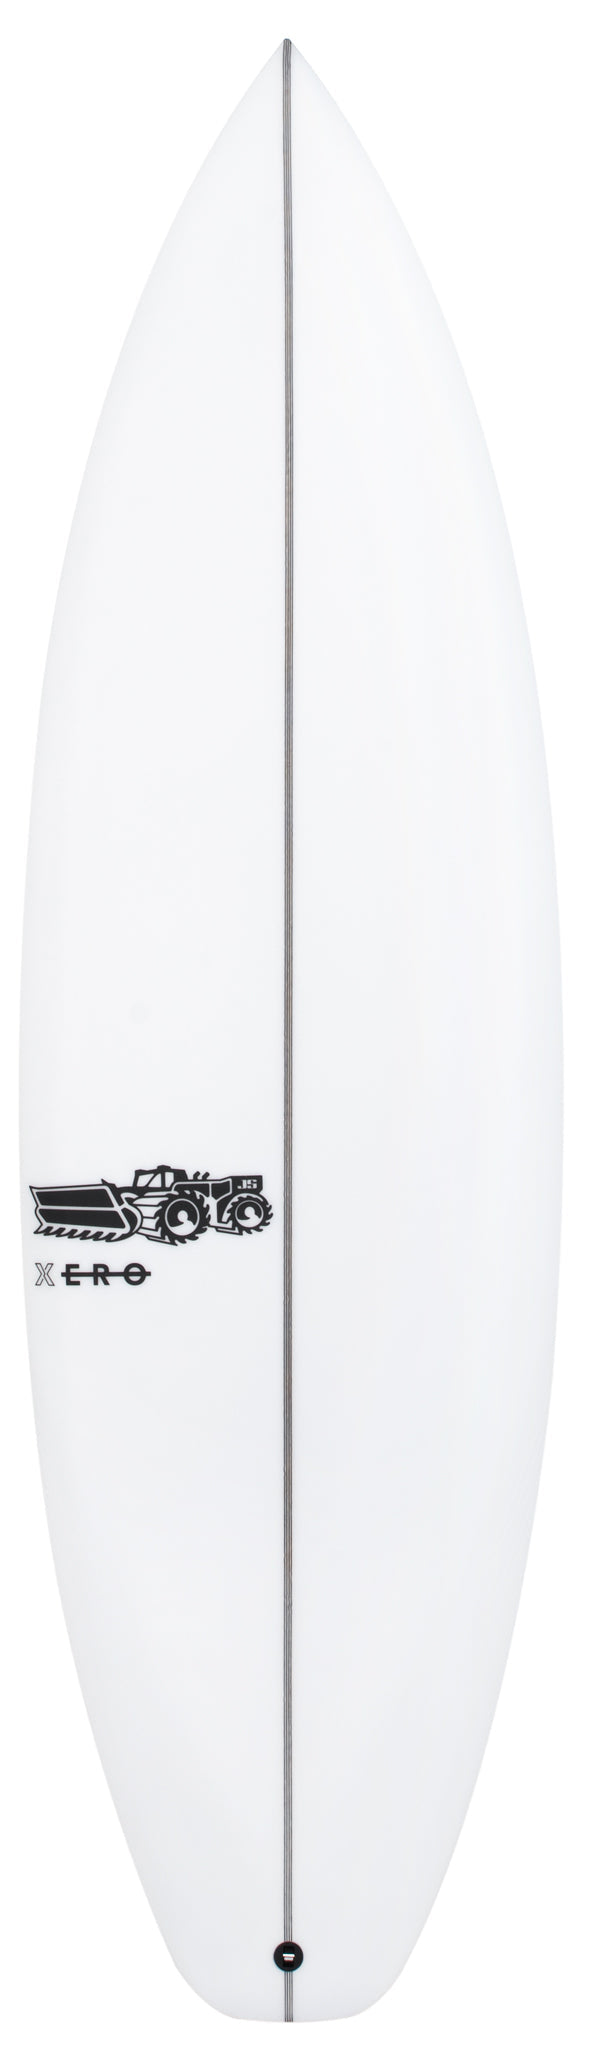 Xero Easy Rider – JS Industries USA